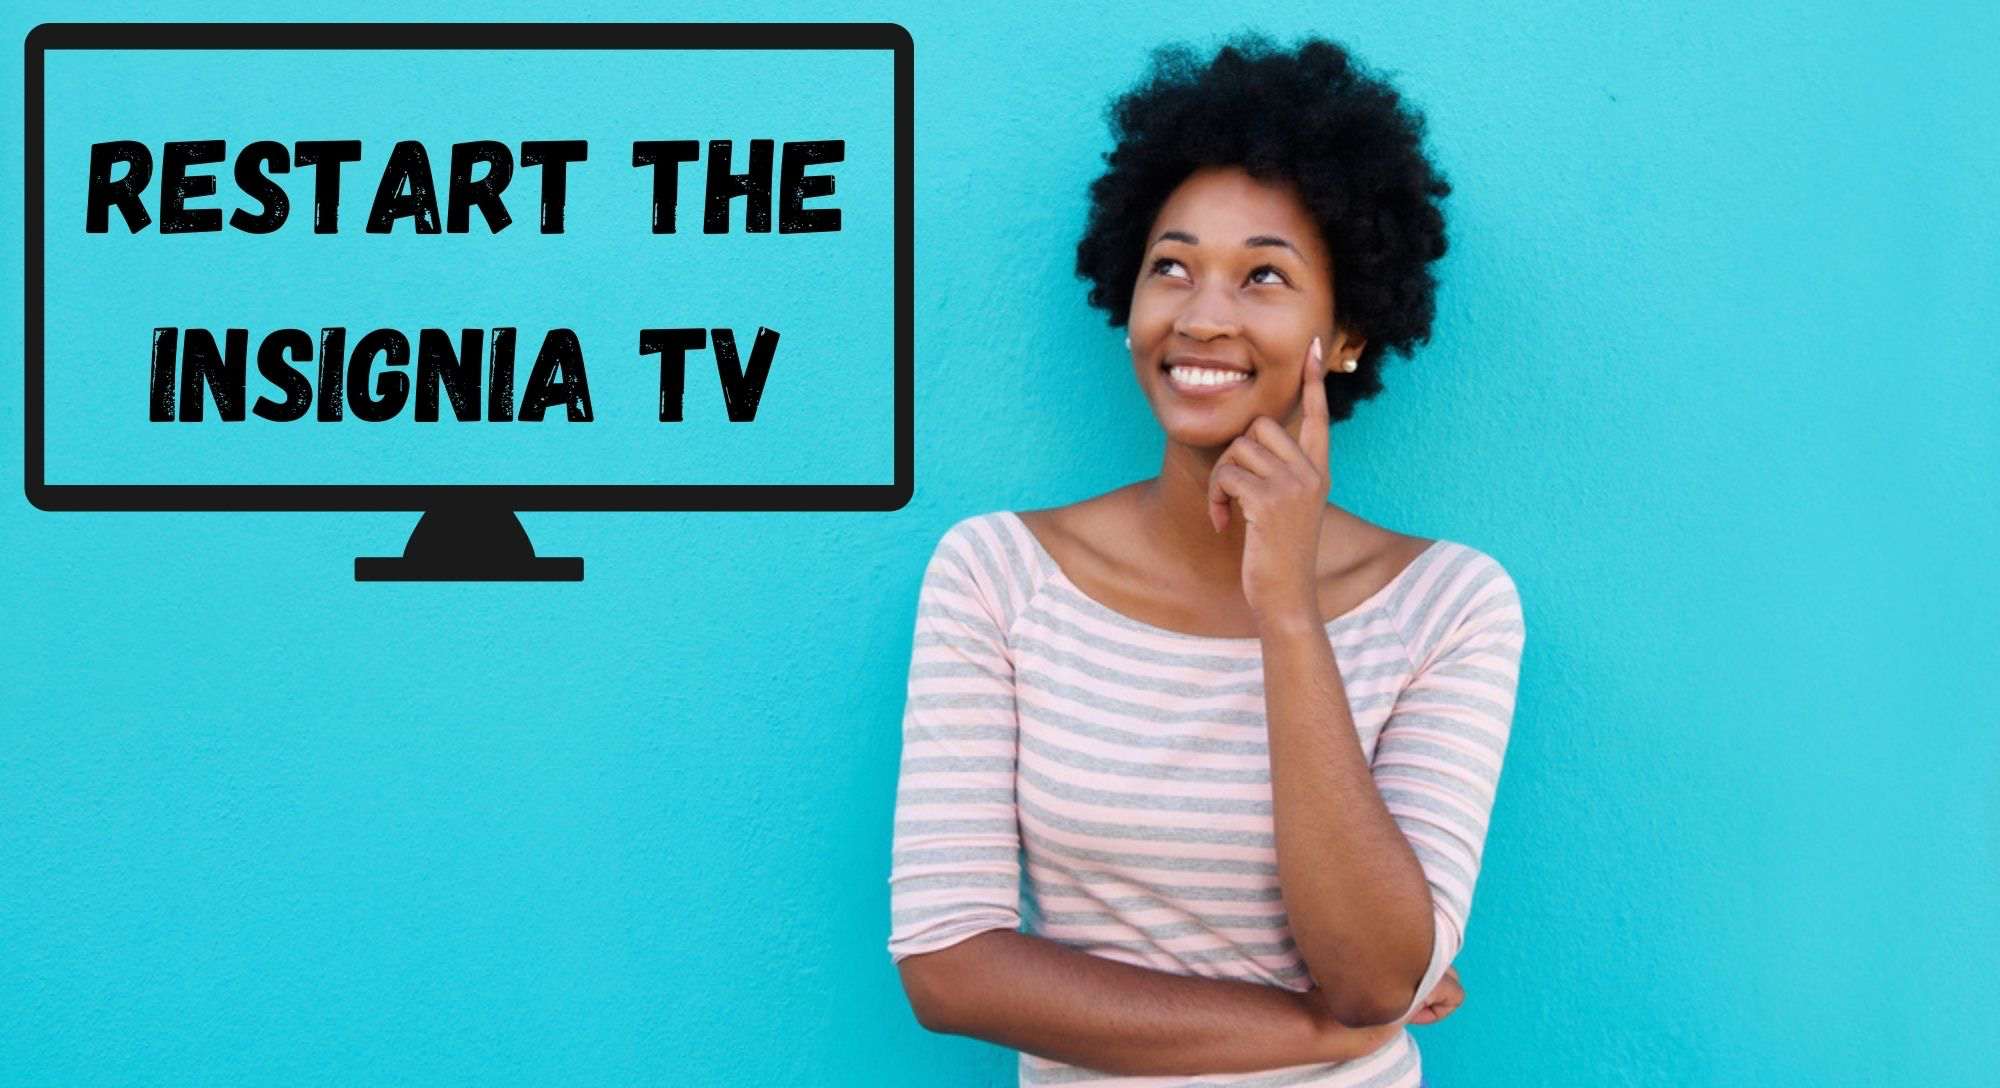 Restart the Insignia TV